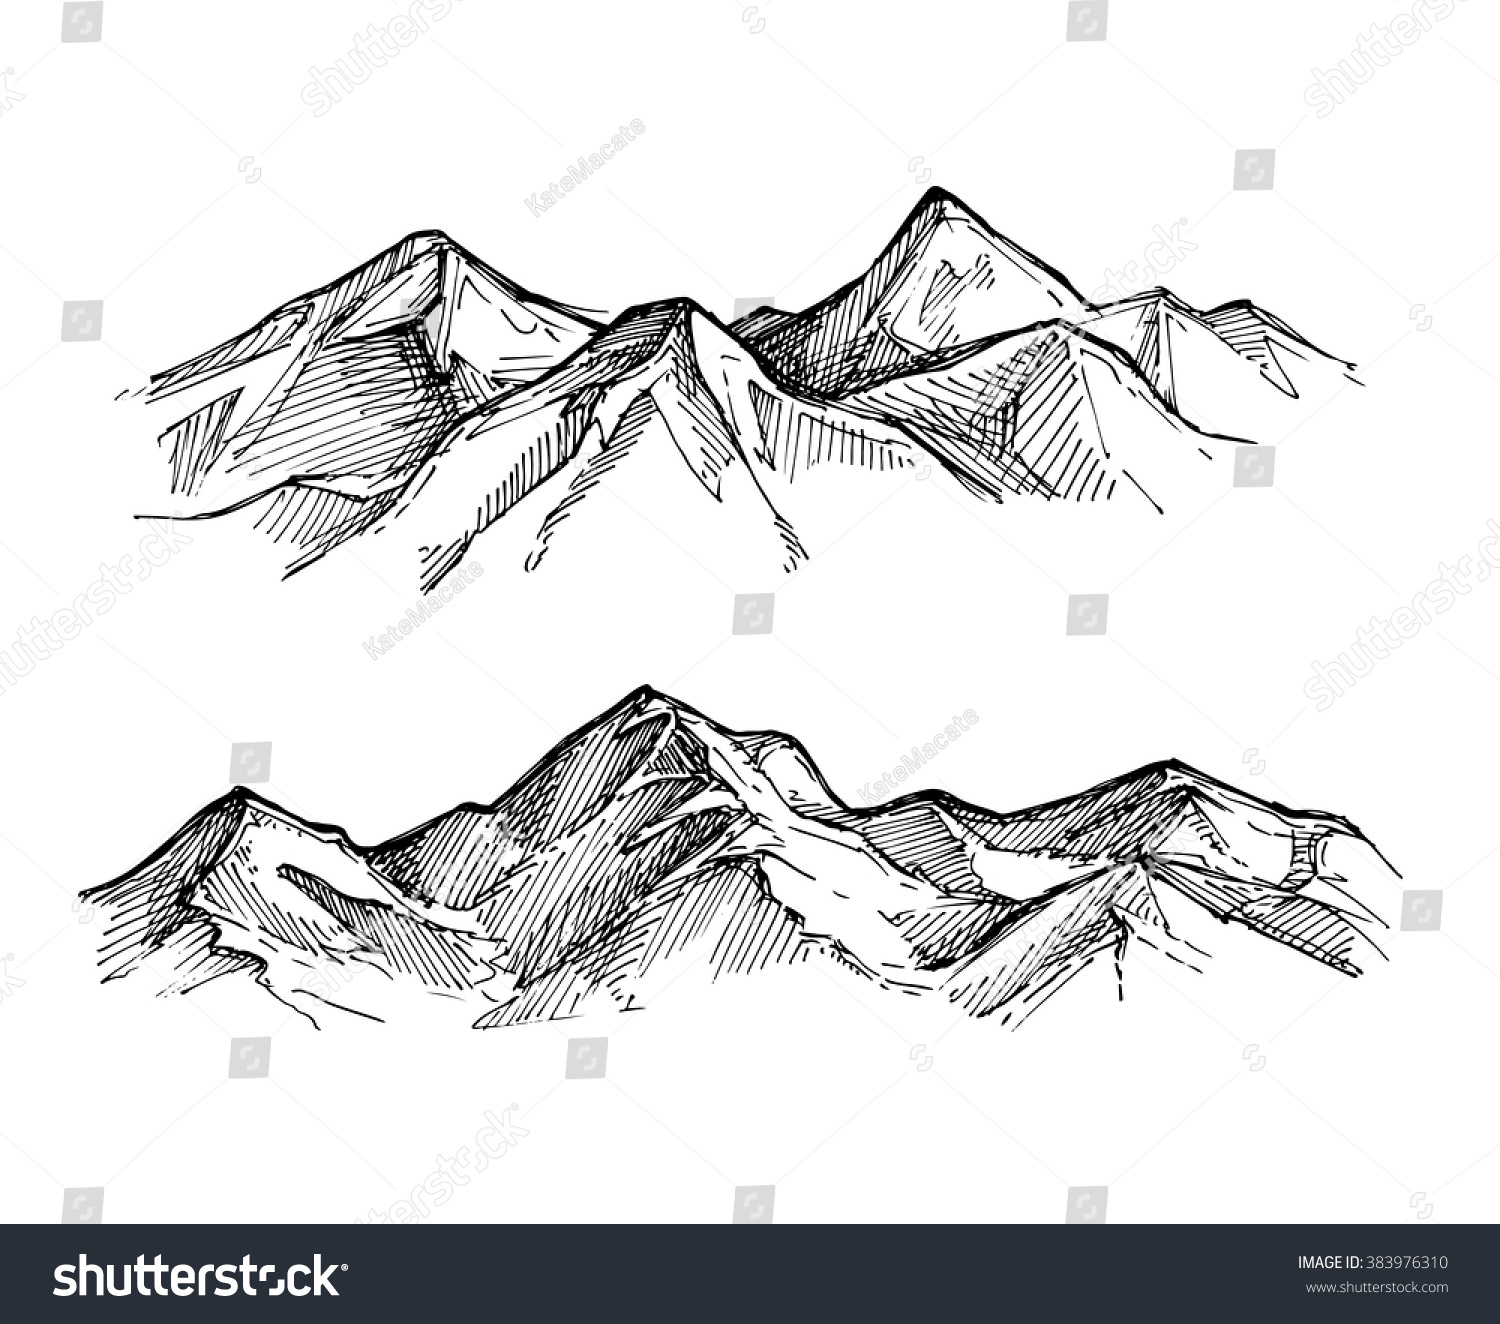 Mountain landscape hand drawn Images, Stock Photos & Vectors | Shutterstock